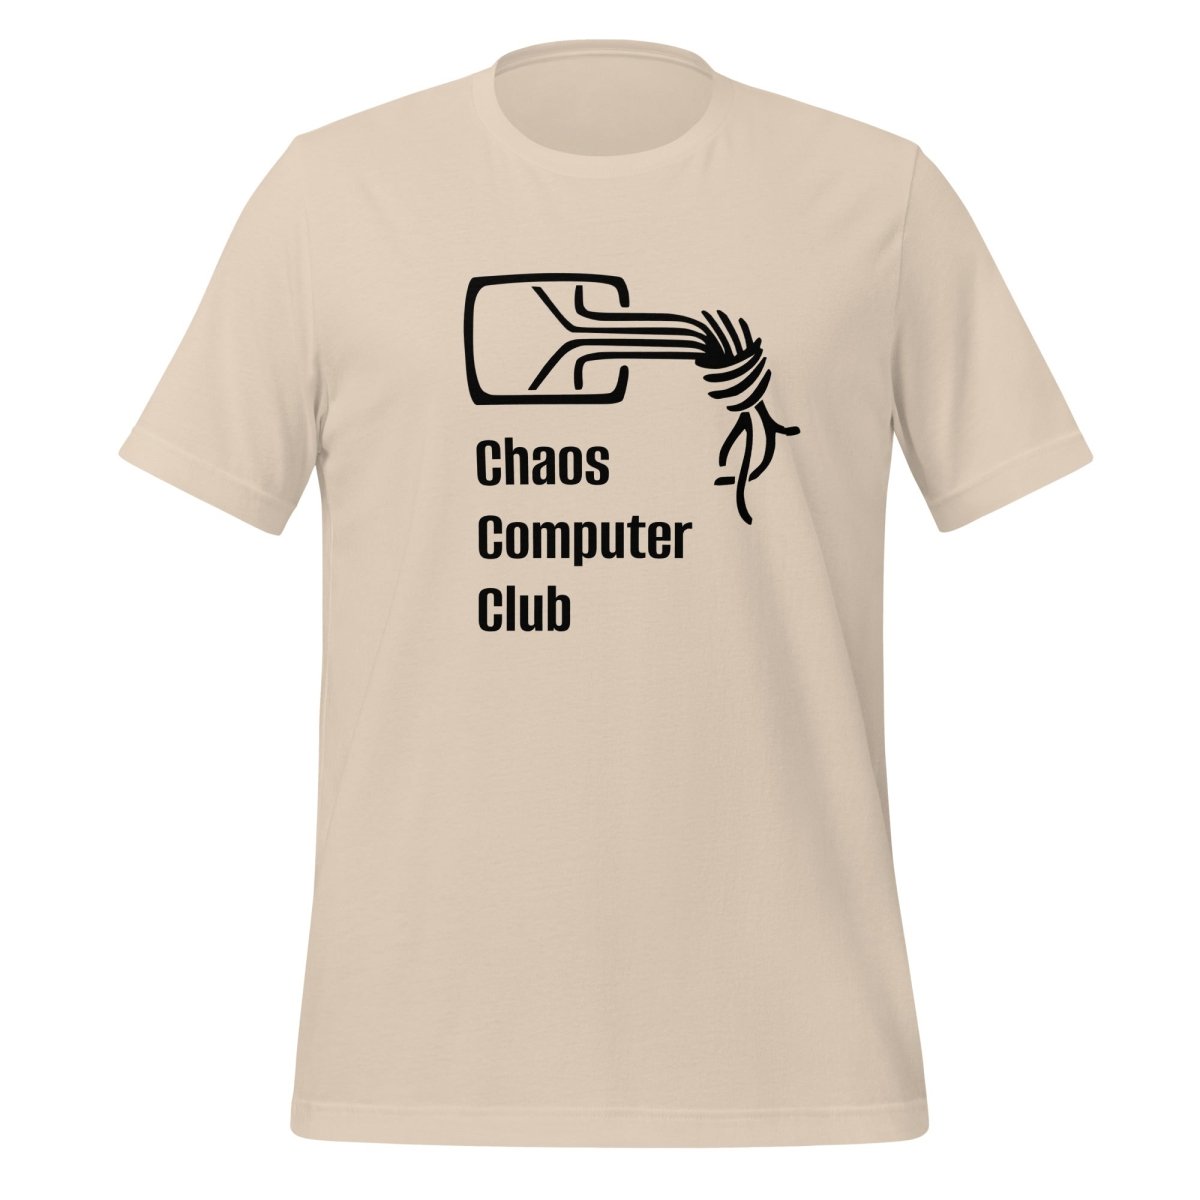 Chaos Computer Club Light T - Shirt (unisex) - Soft Cream - AI Store